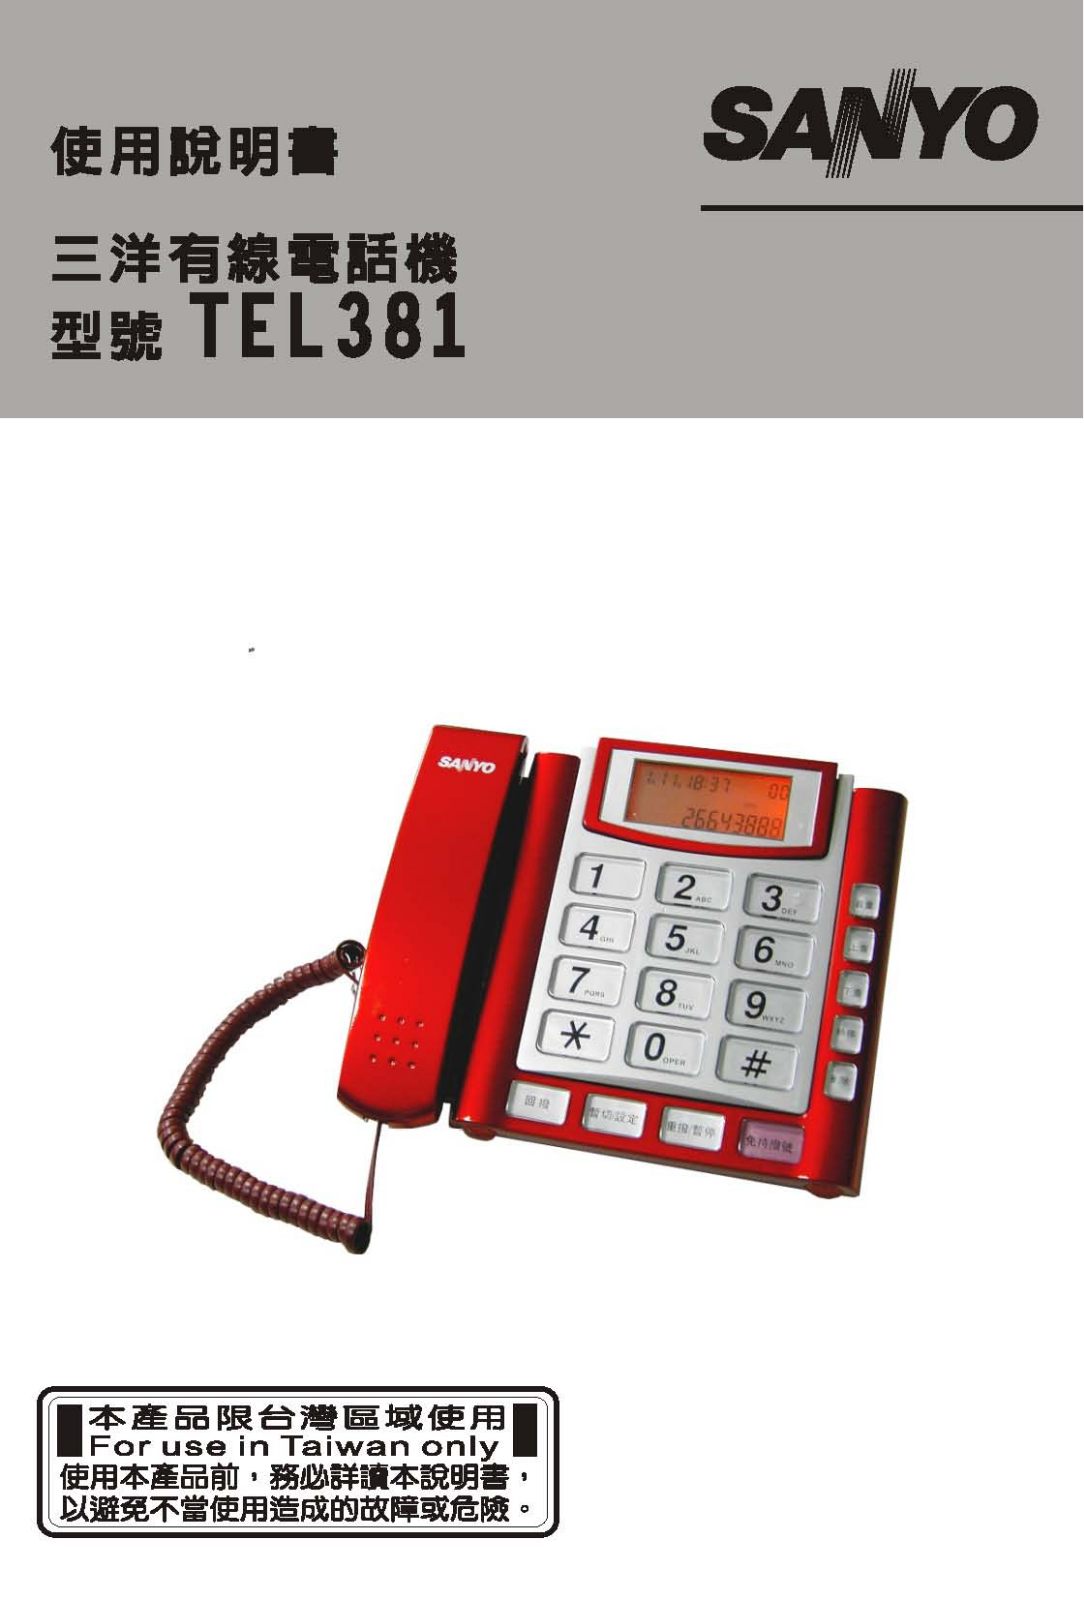 SANYO TEL381 User Manual